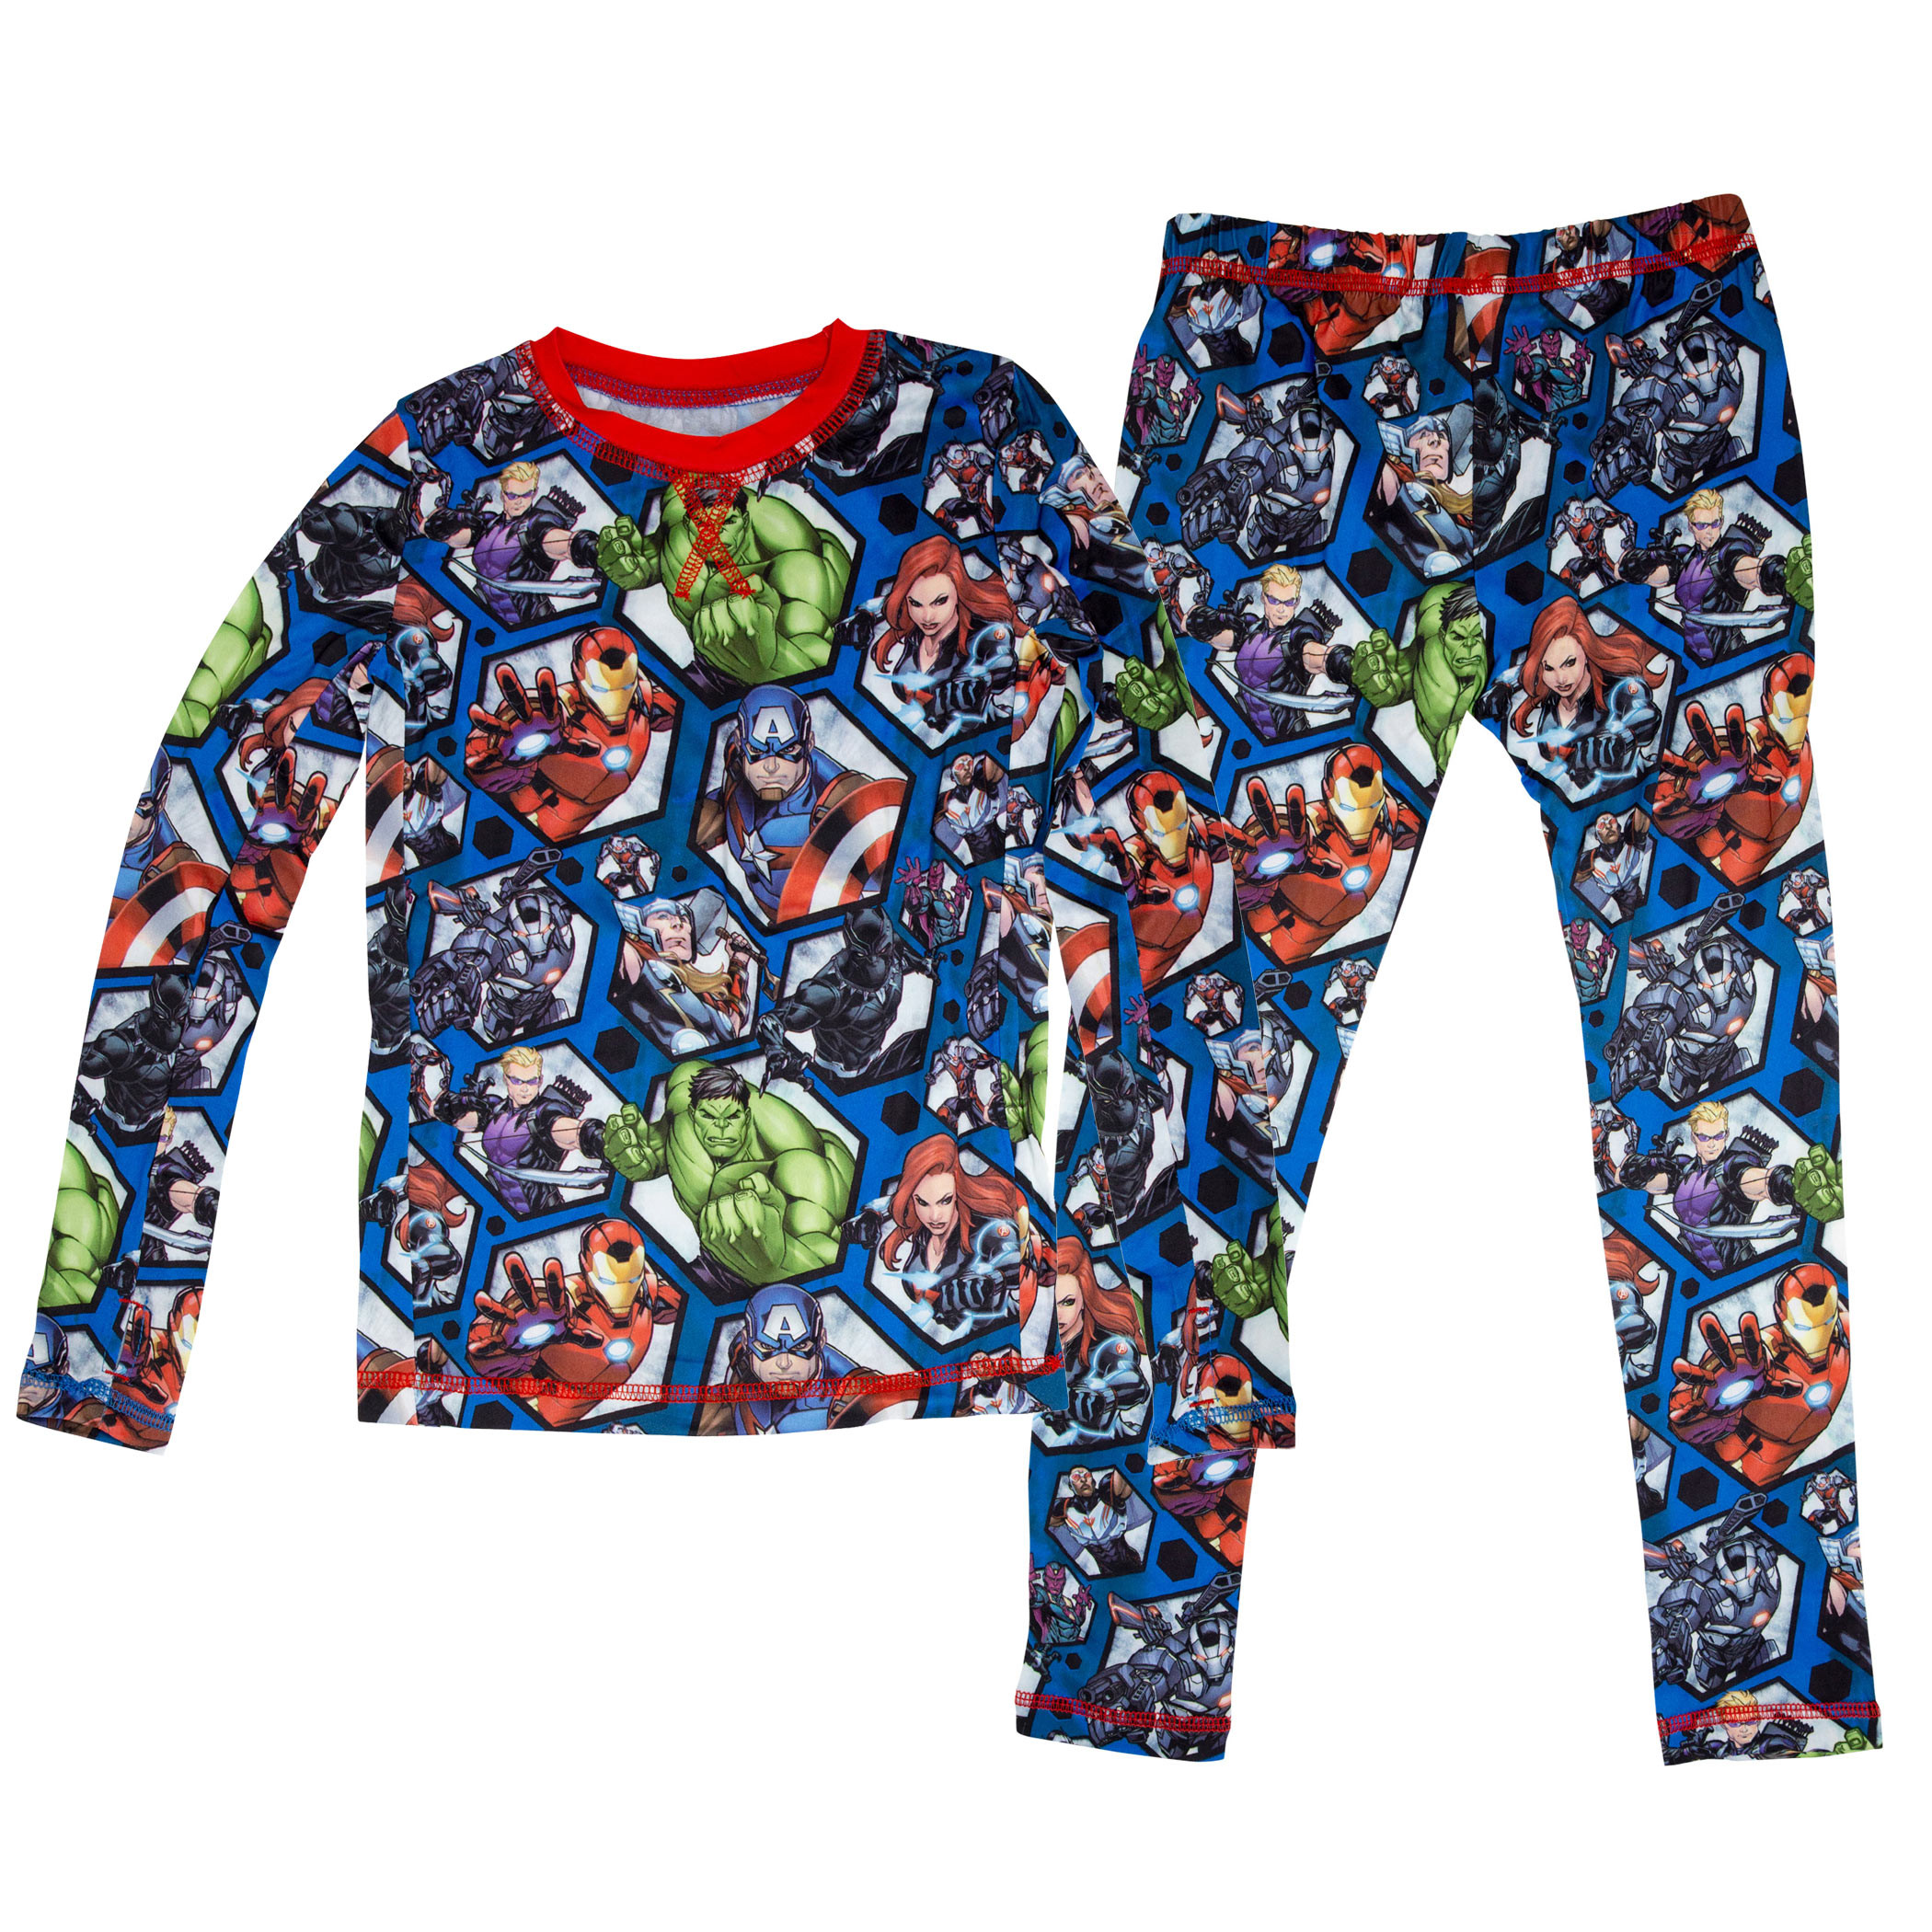 Avengers Marvel Big Boys 2Piece Pajama Set